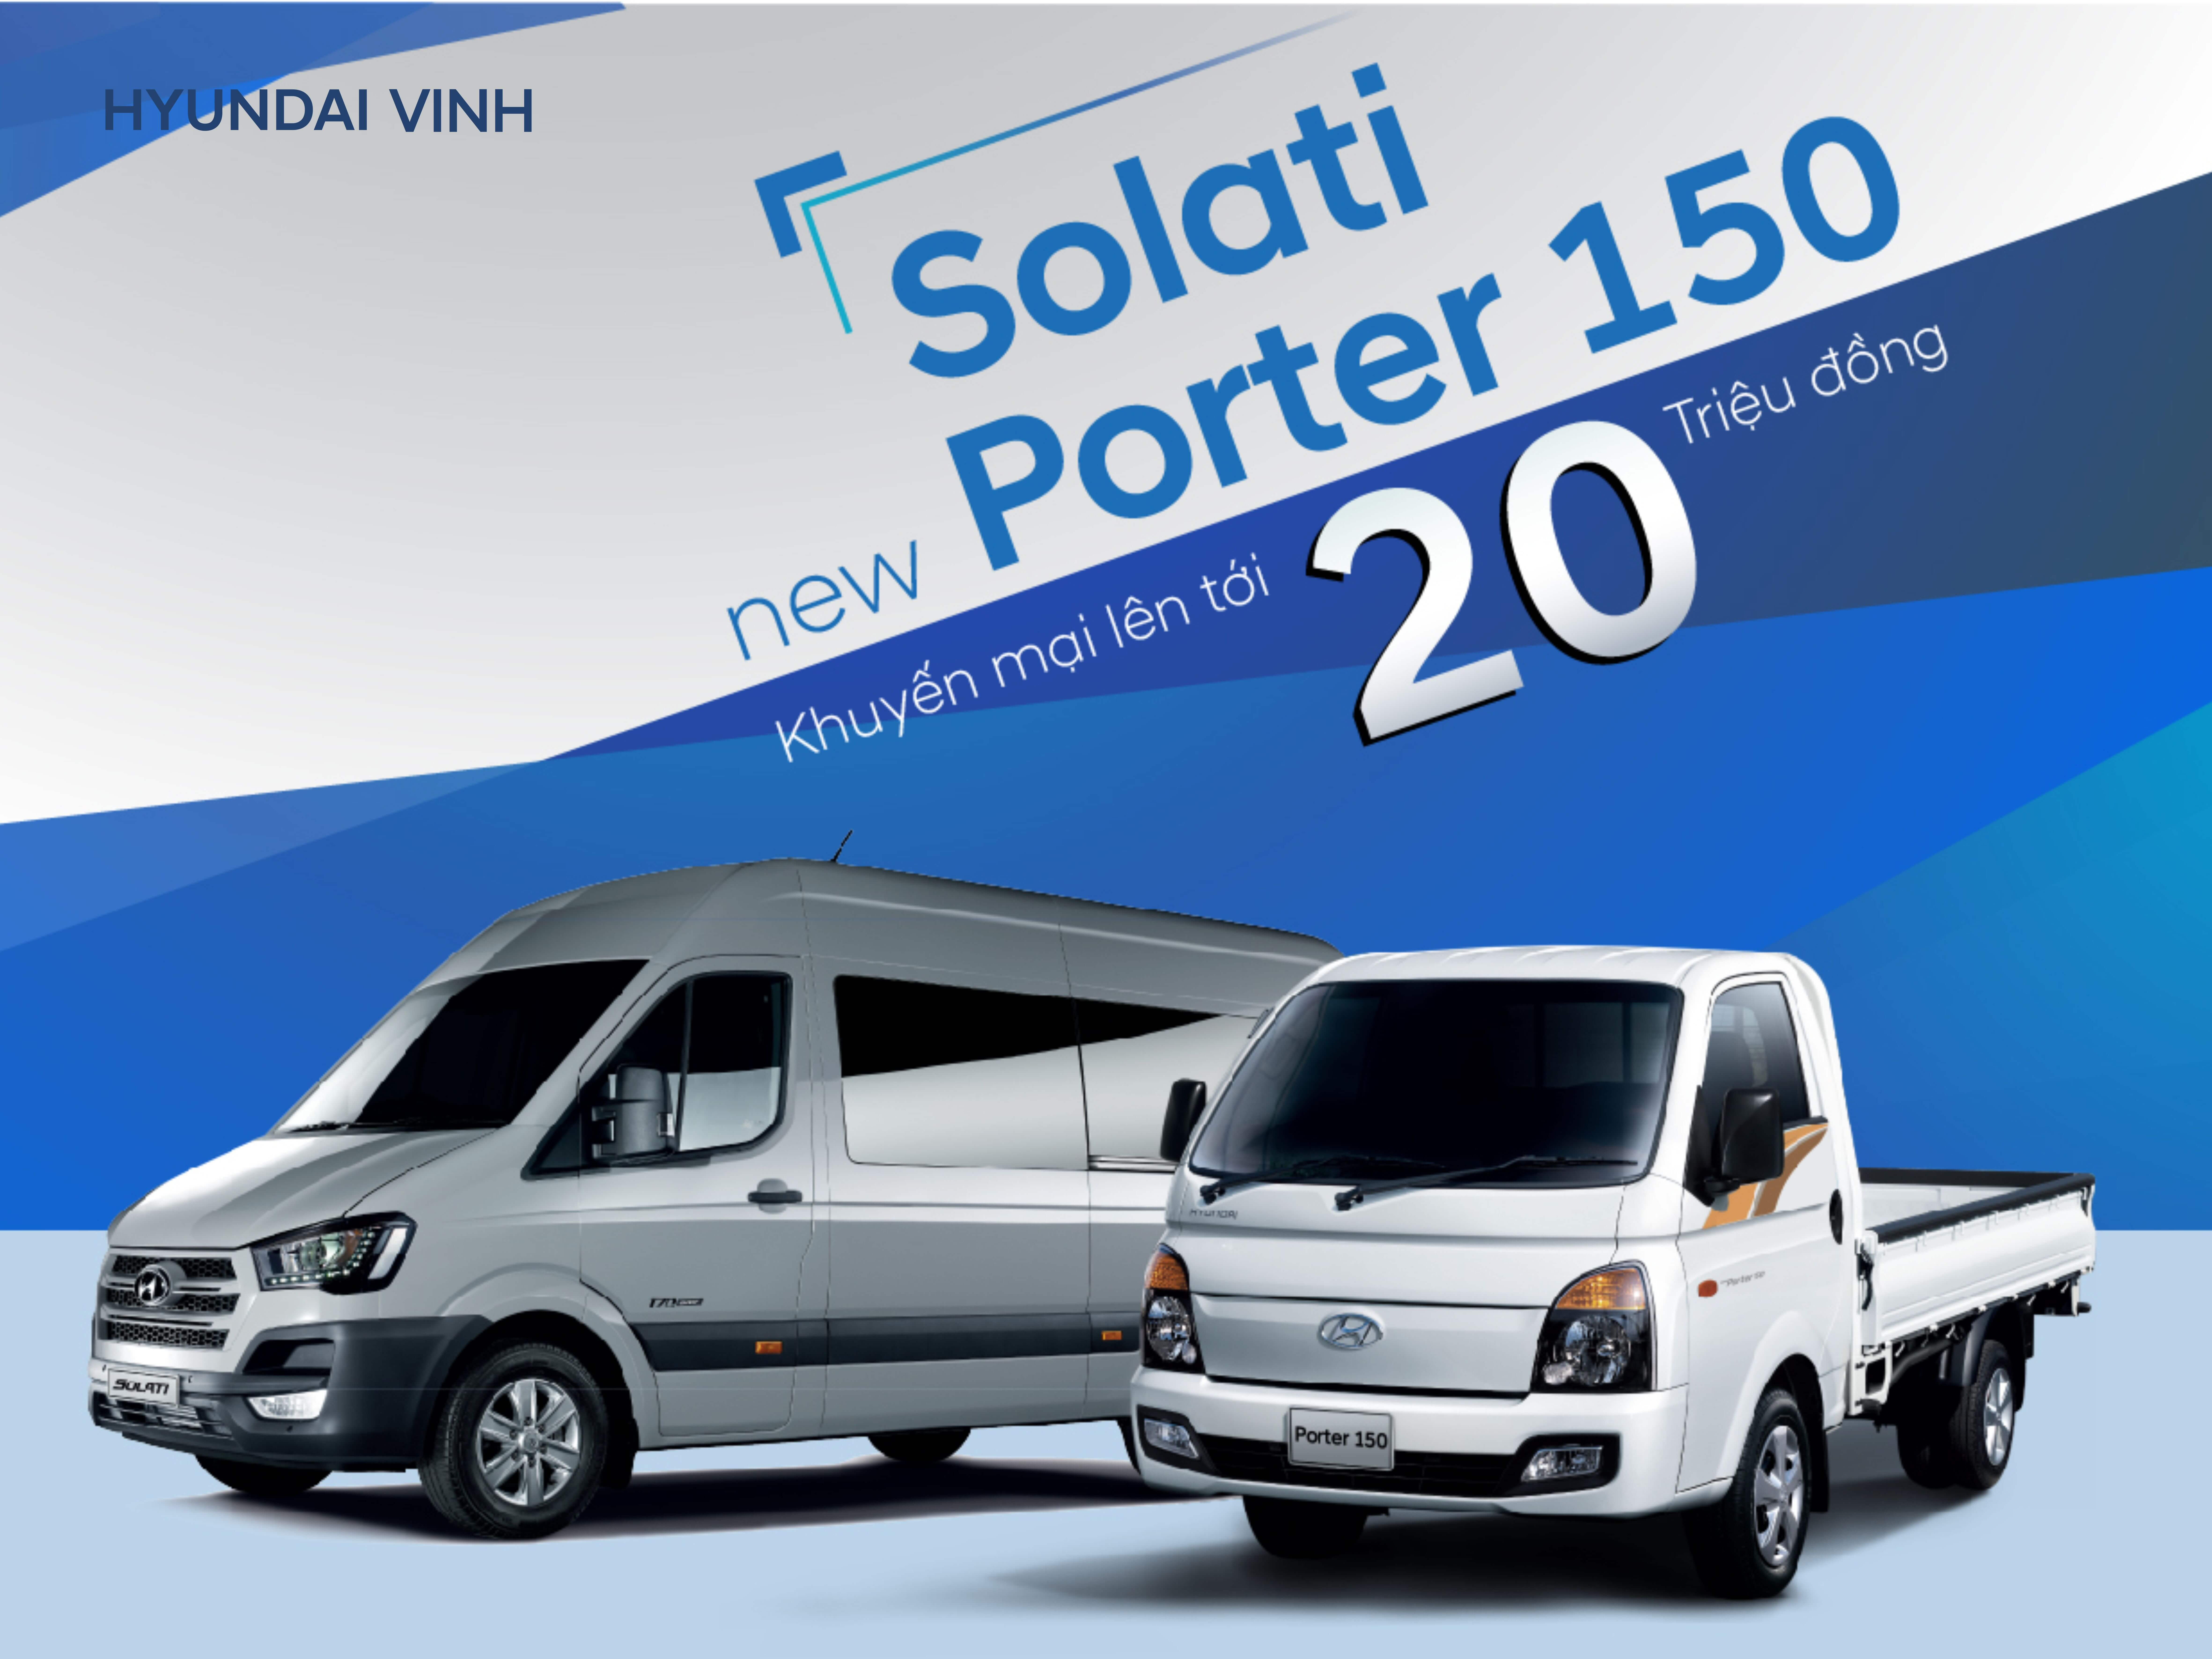 Khuyễn mãi lớn Hyundai Solati, New Porter 150